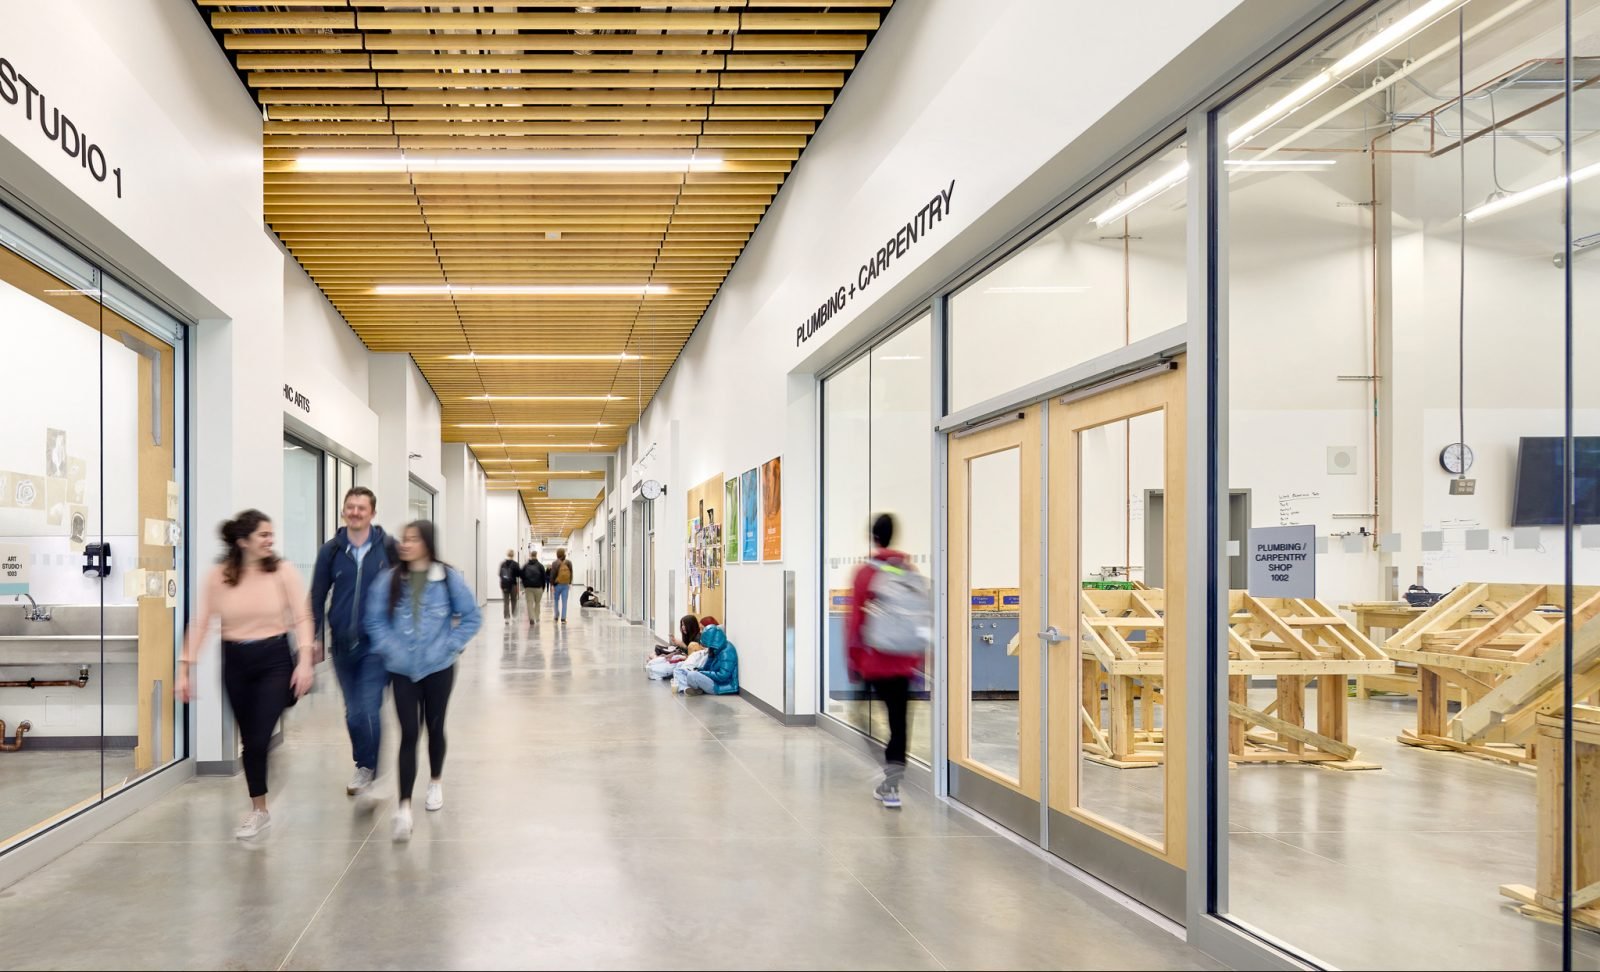 New Westminster Secondary hallway